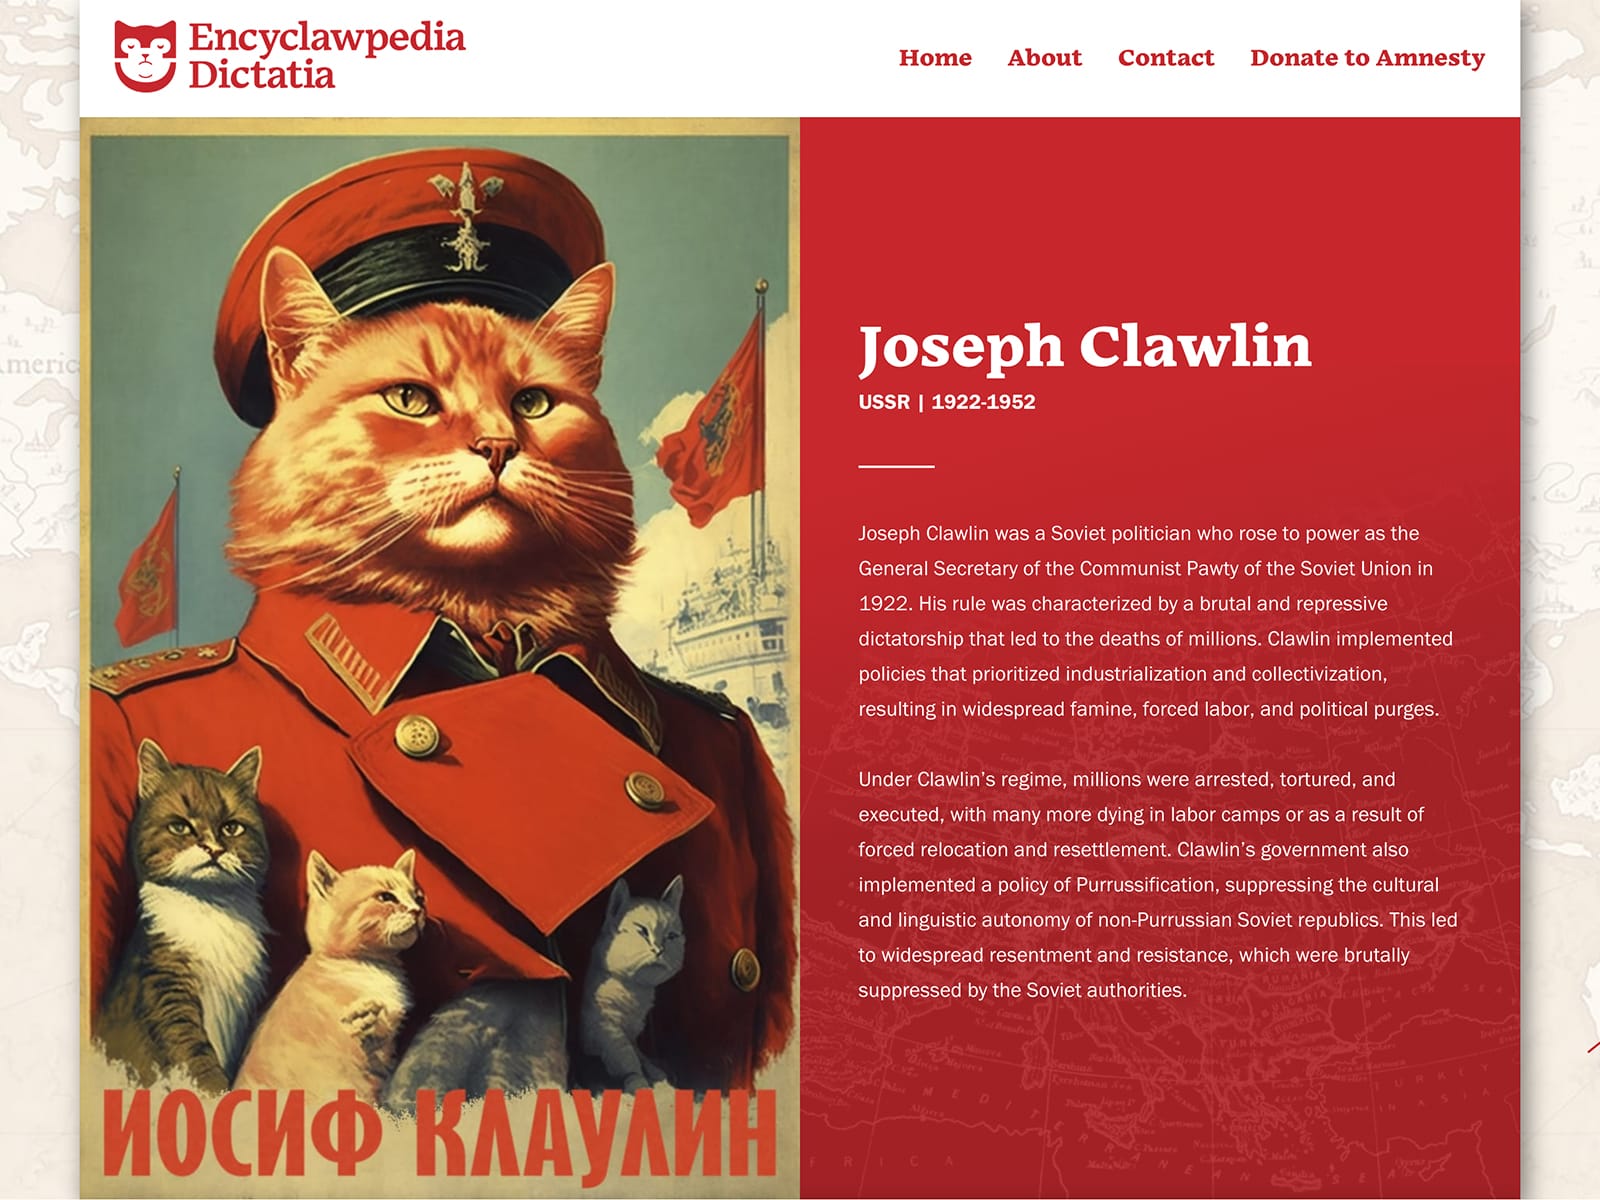 Joseph Clawlin